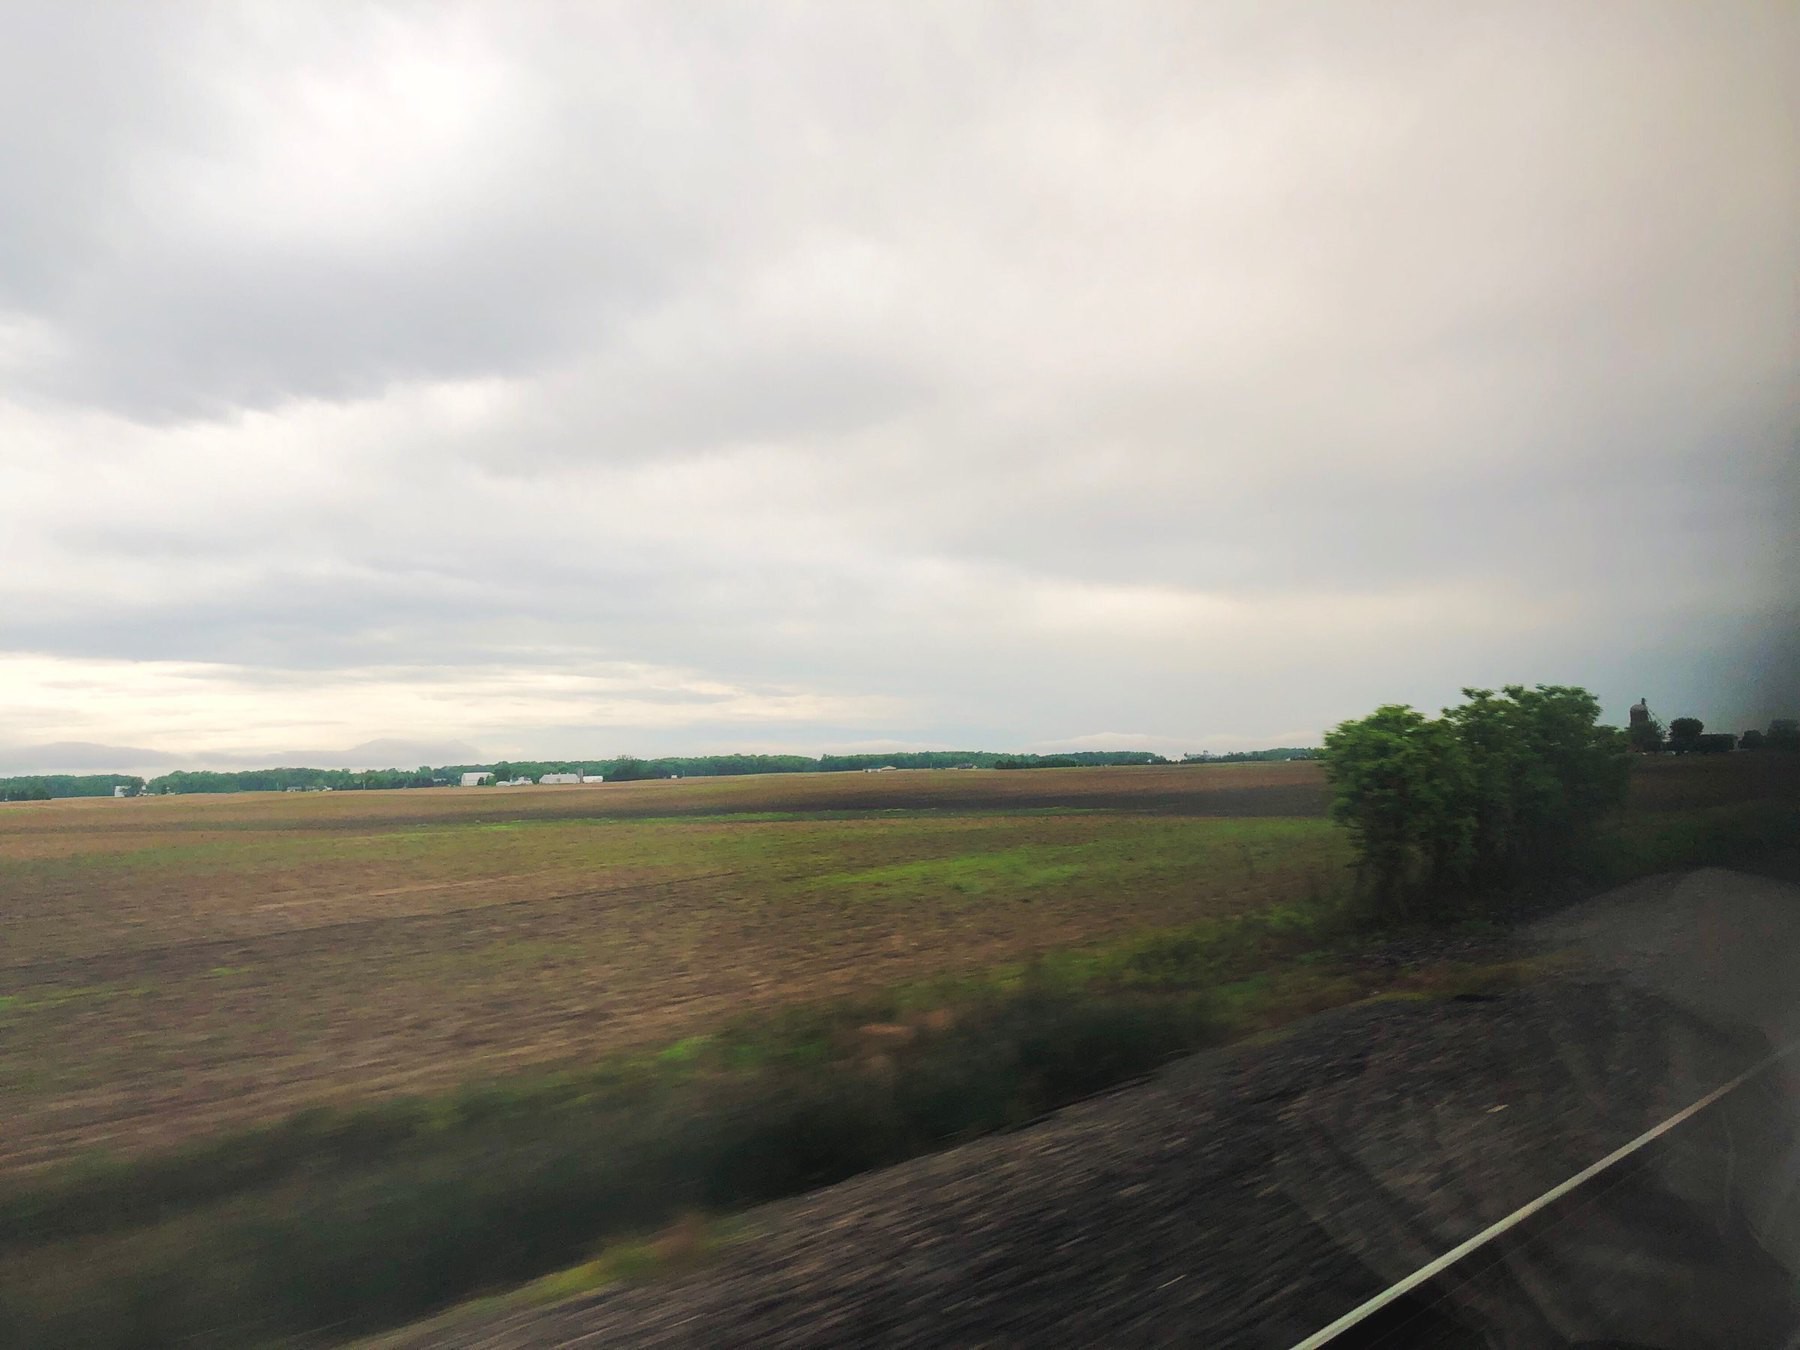 View of Ohio farmland from train window